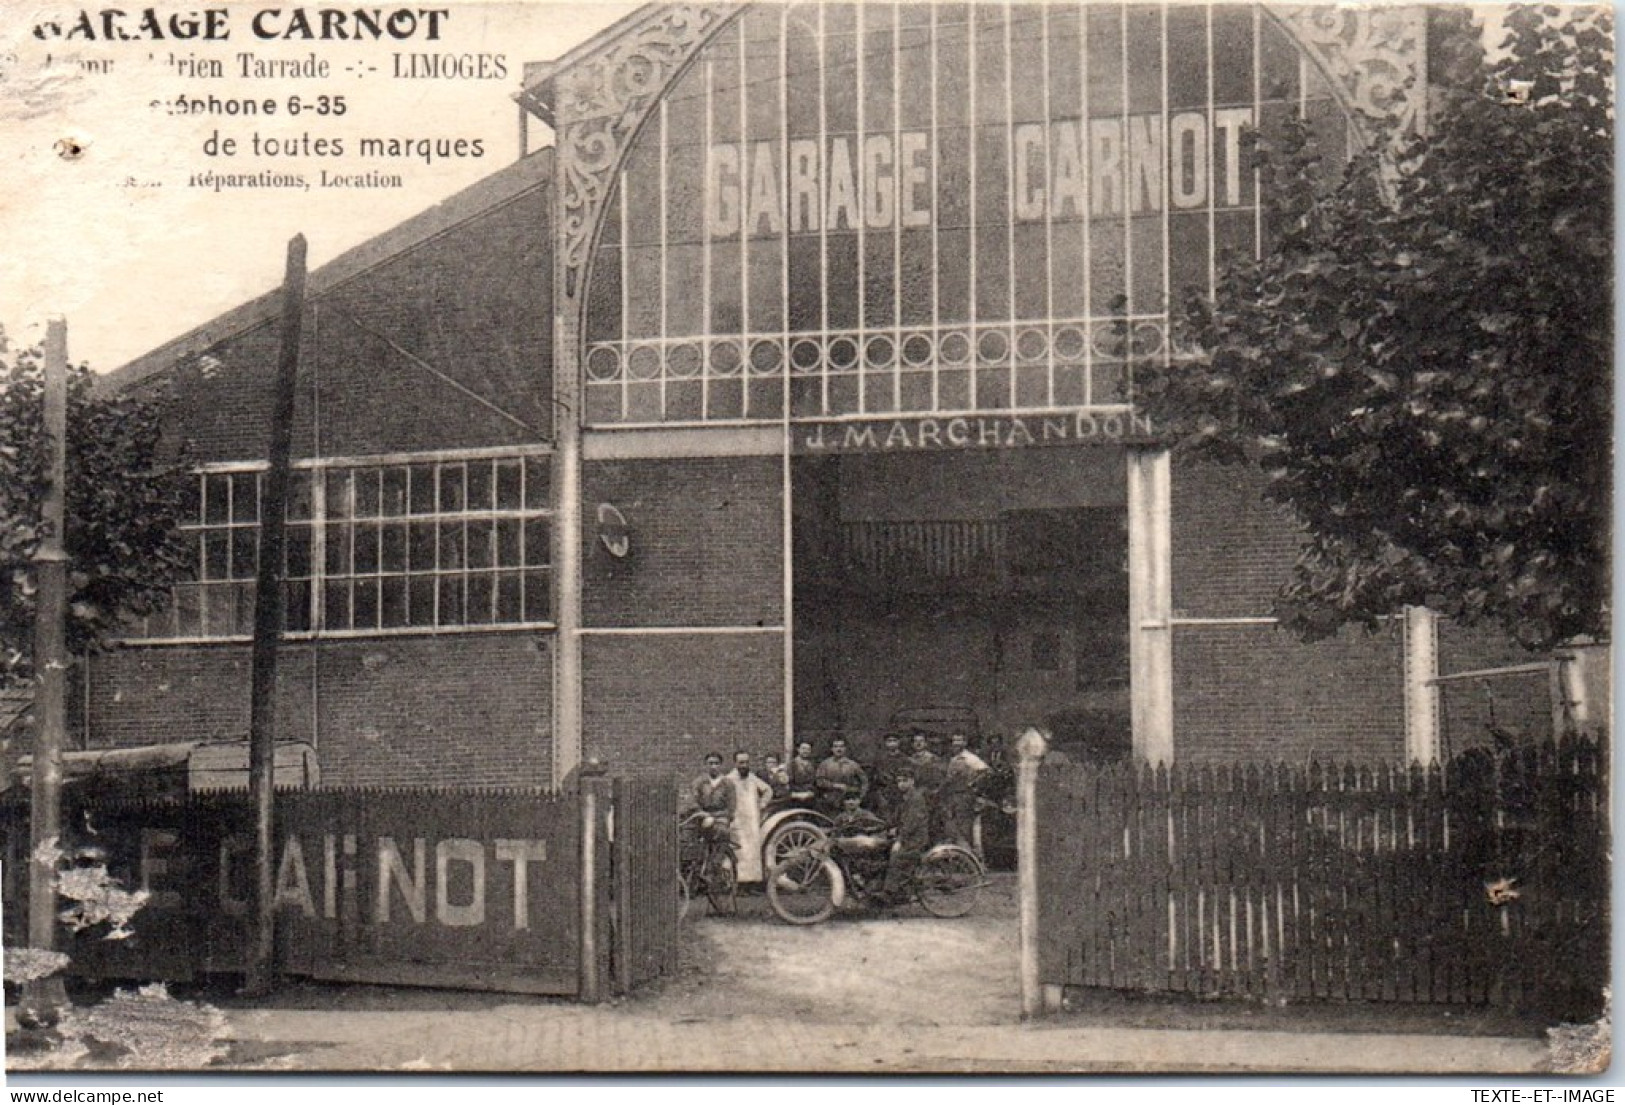 87 LIMOGES - Garage CARNOT Av Tarrade [rare] Frotee A Gauche - Limoges